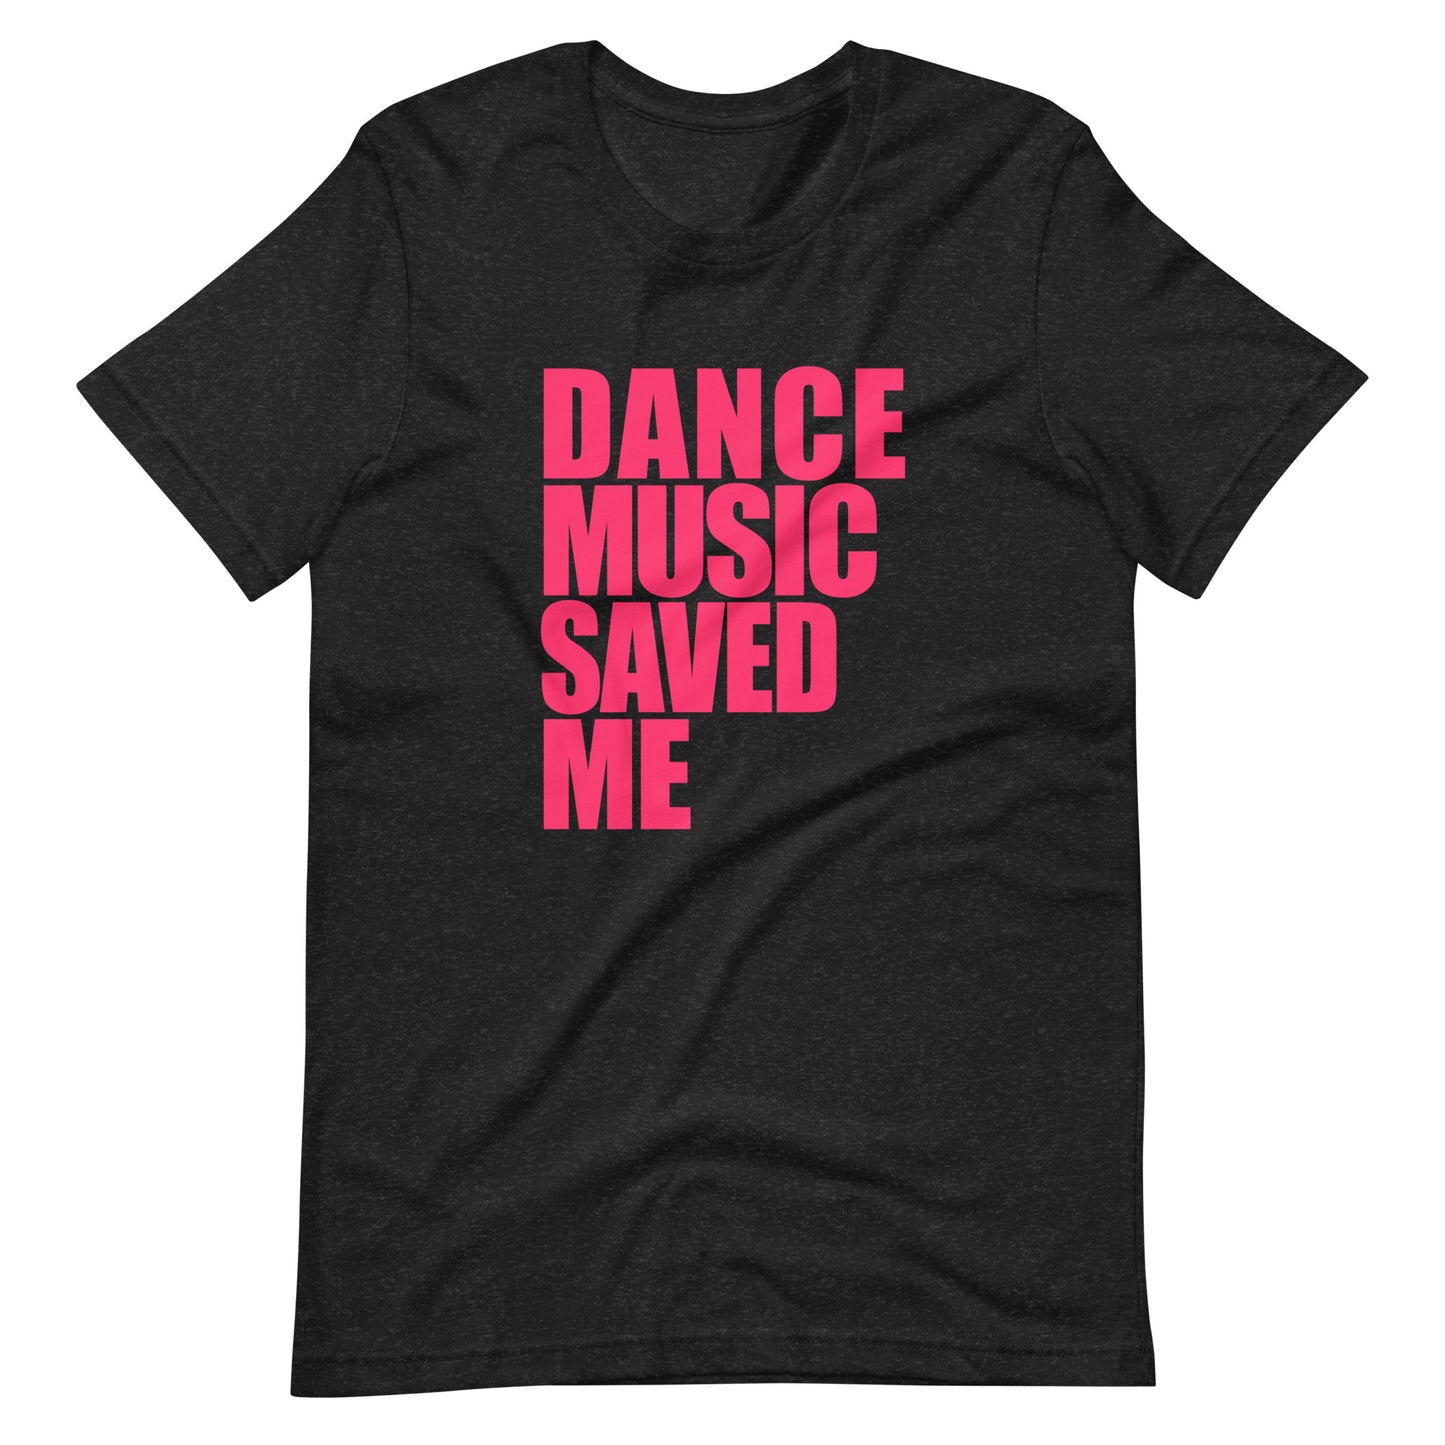 DANCE MUSIC SAVED ME - T-shirt